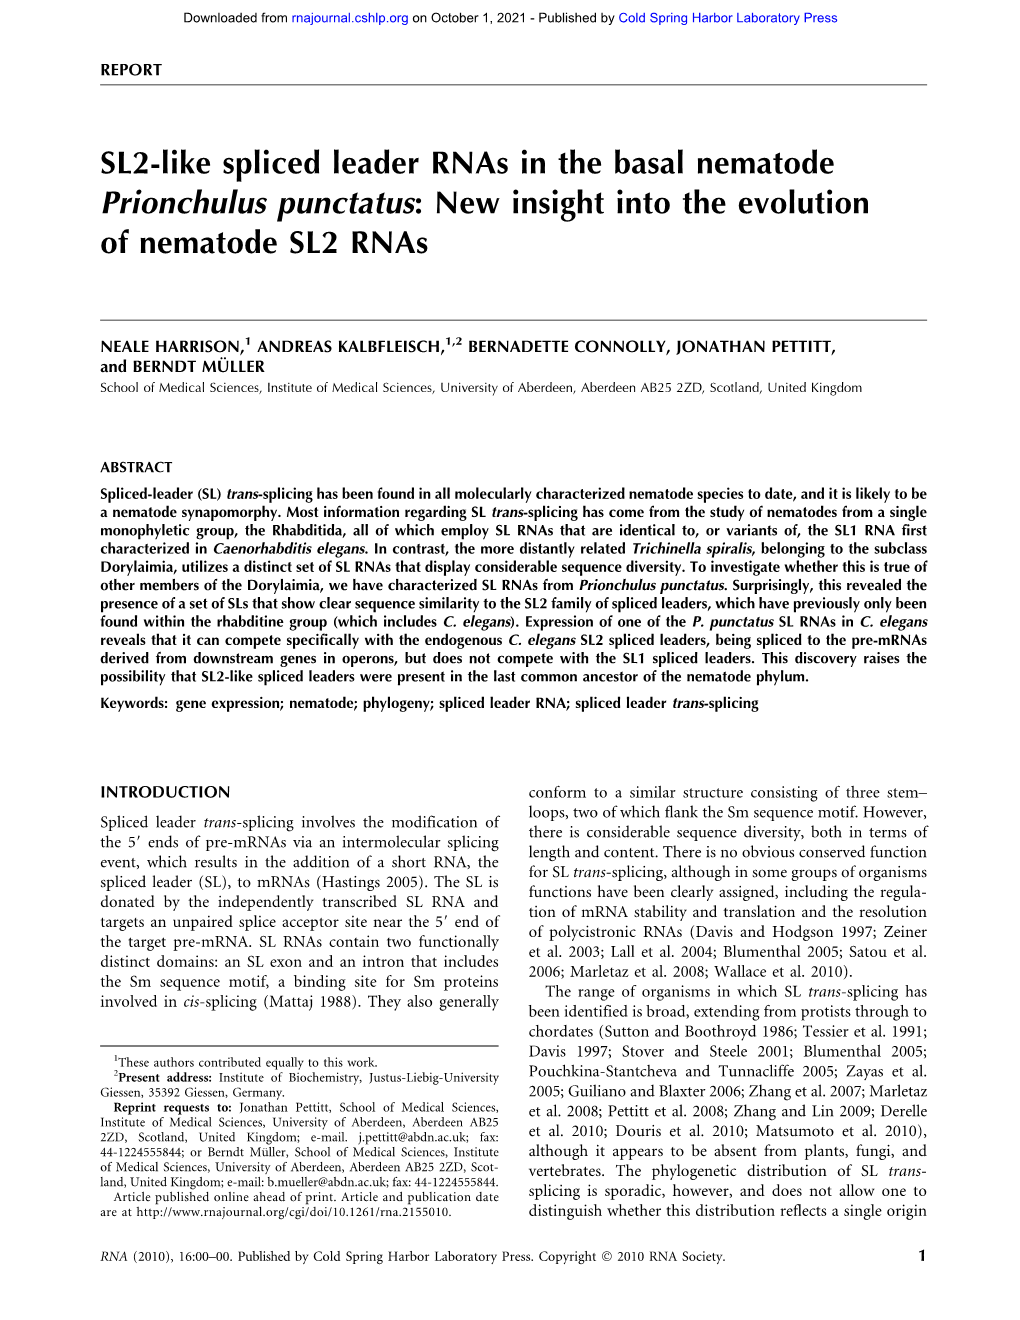 SL2-Like Spliced Leader Rnas in the Basal Nematode Prionchulus Punctatus: New Insight Into the Evolution of Nematode SL2 Rnas